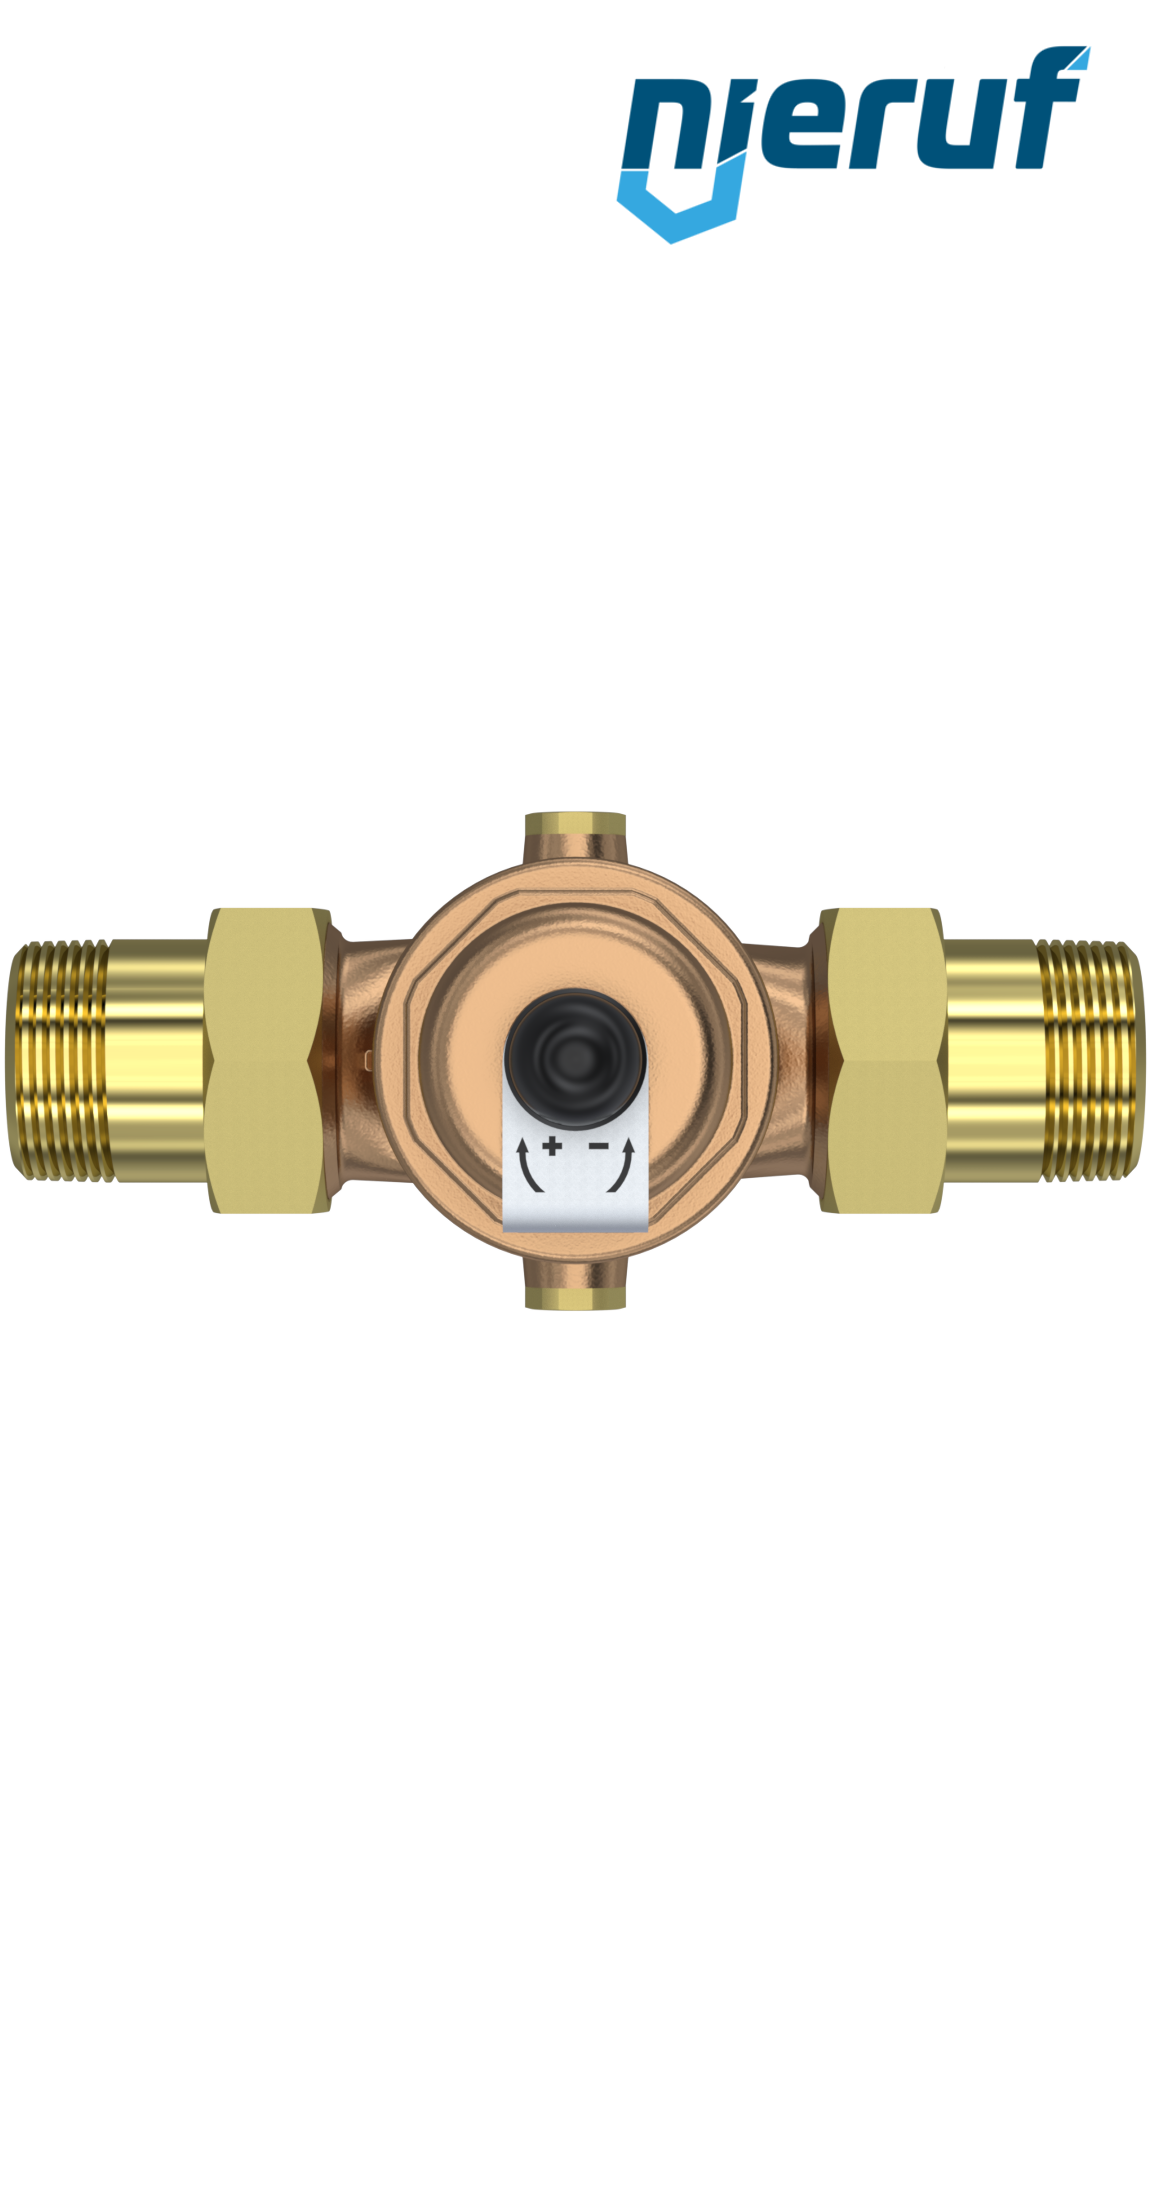 pressure reducing valve 1 1/4" inch male thread DM02 gunmetall FKM 0.5 - 2.0 bar